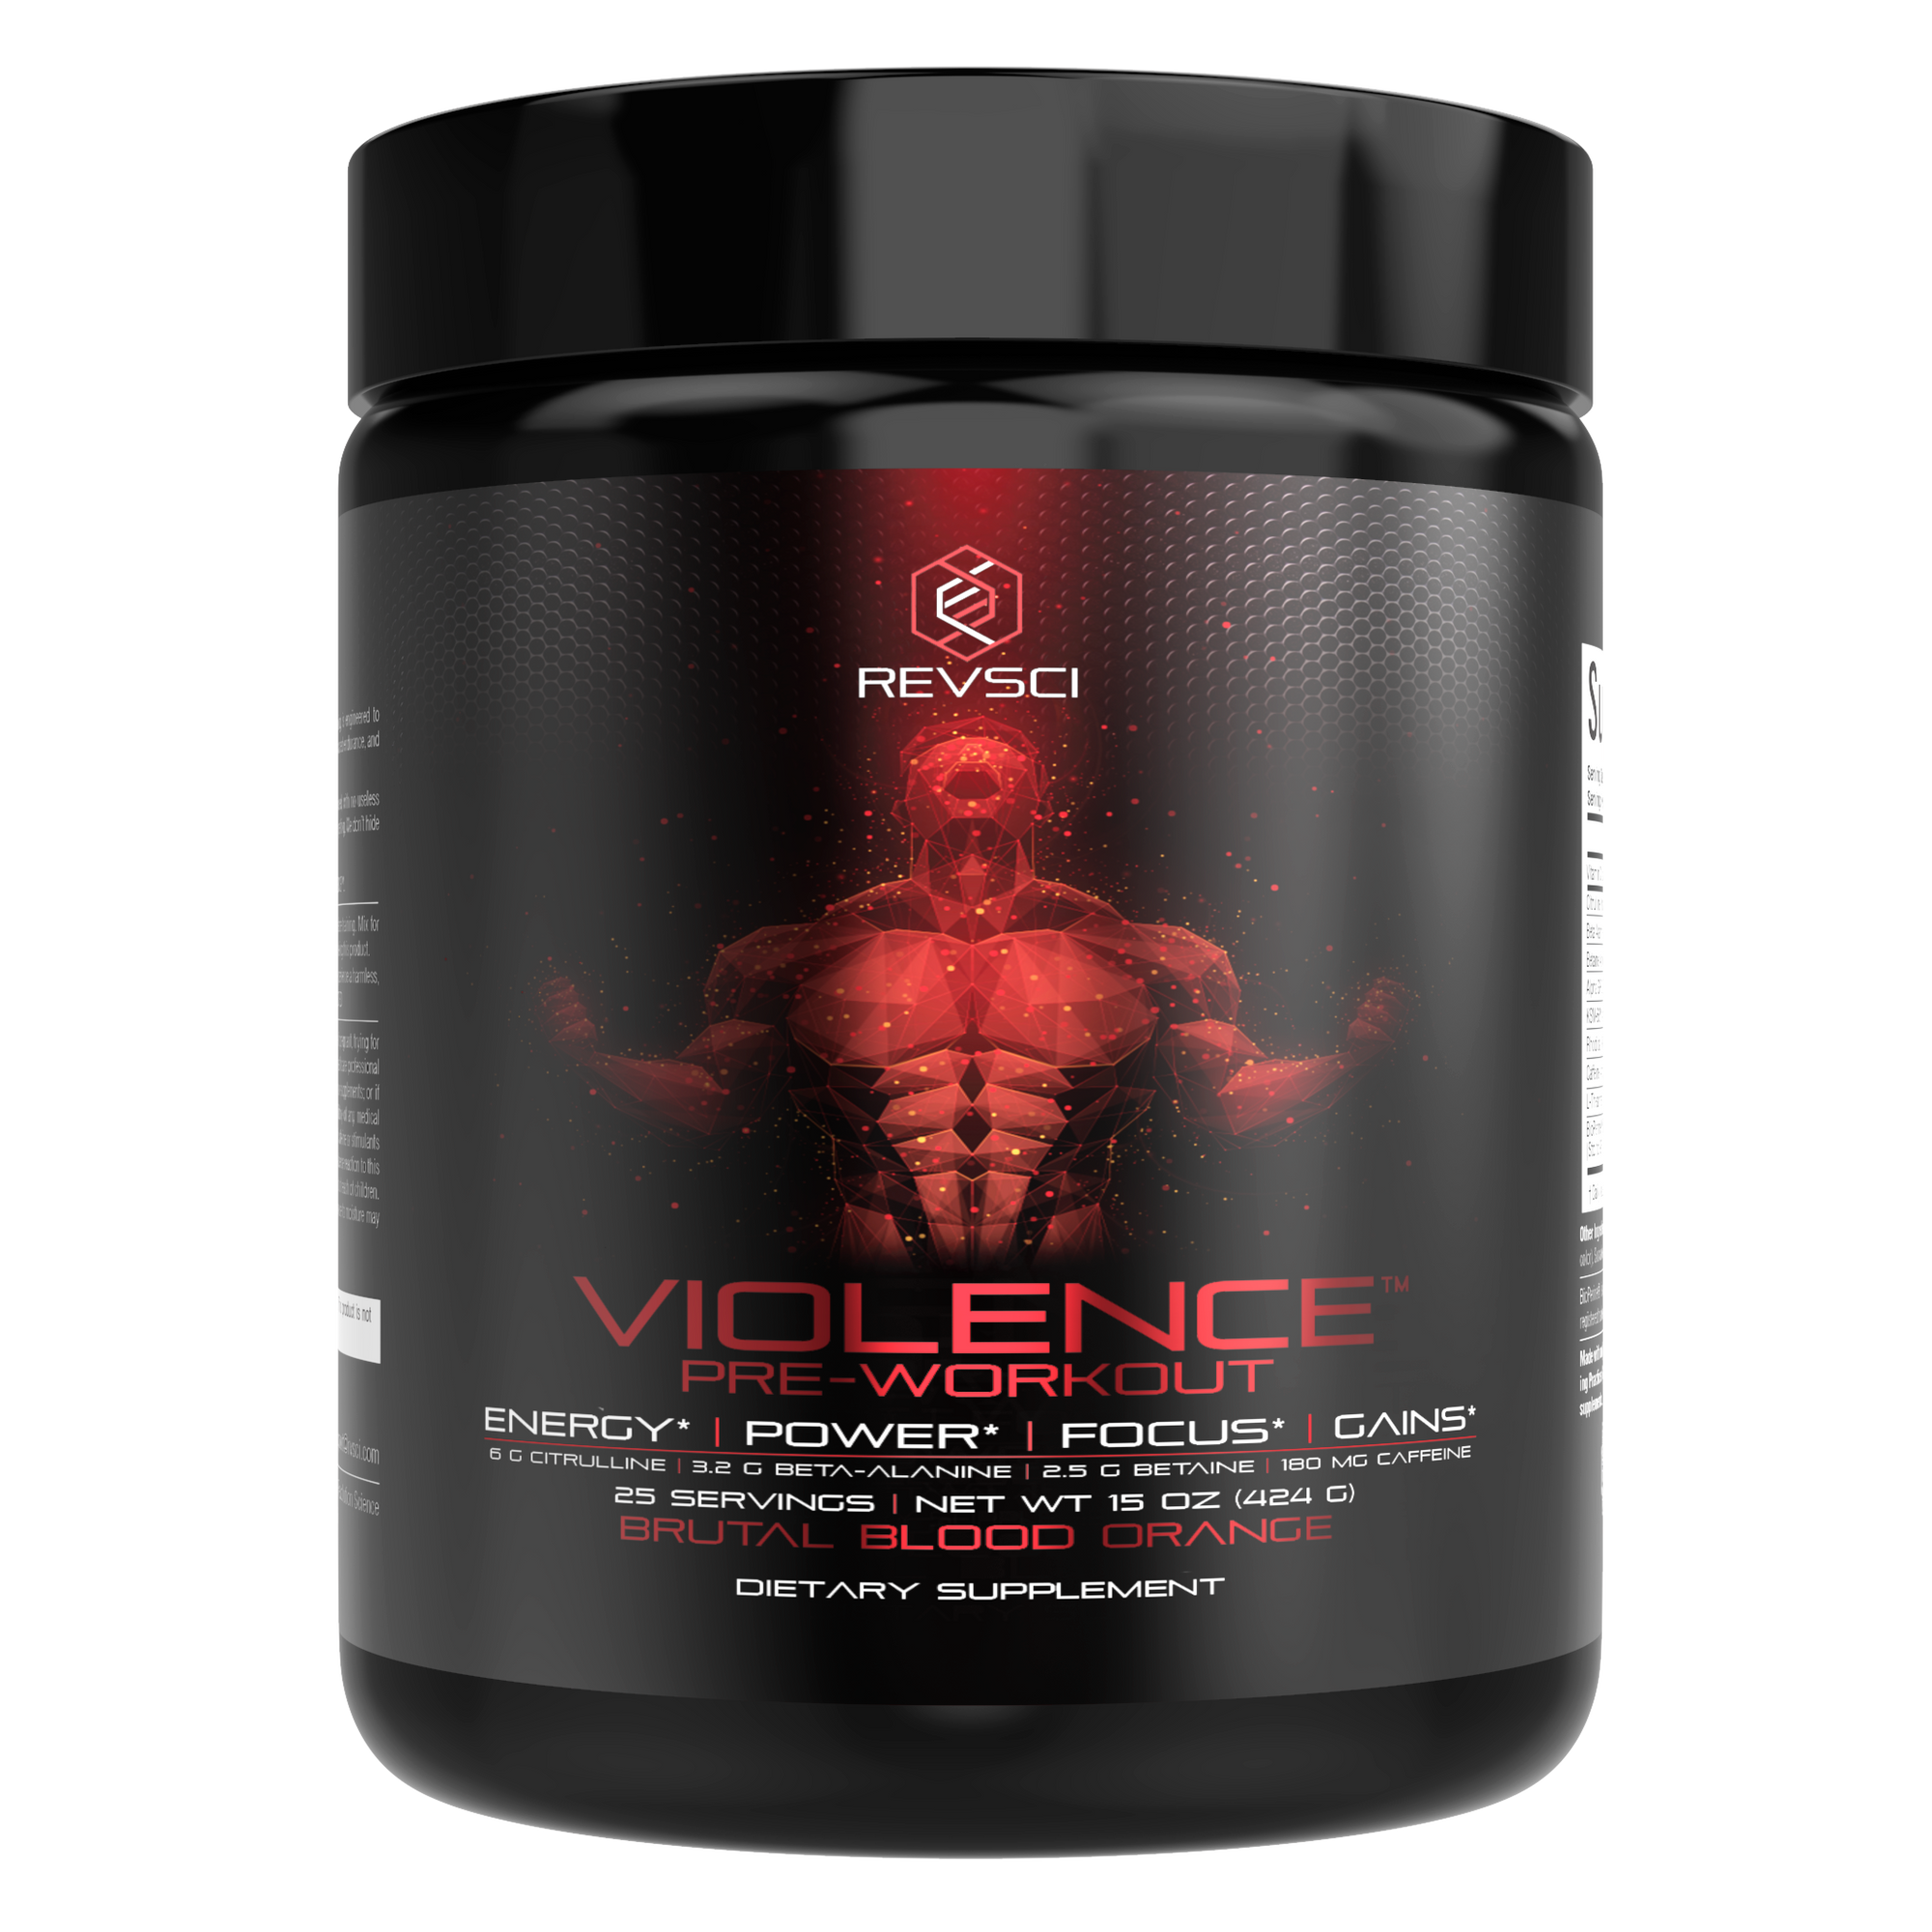 VIOLENCE Pre-Workout Powder - Clinically Dosed Energy, Power, Focus, Pump, & Gains - 180 mg Caffeine